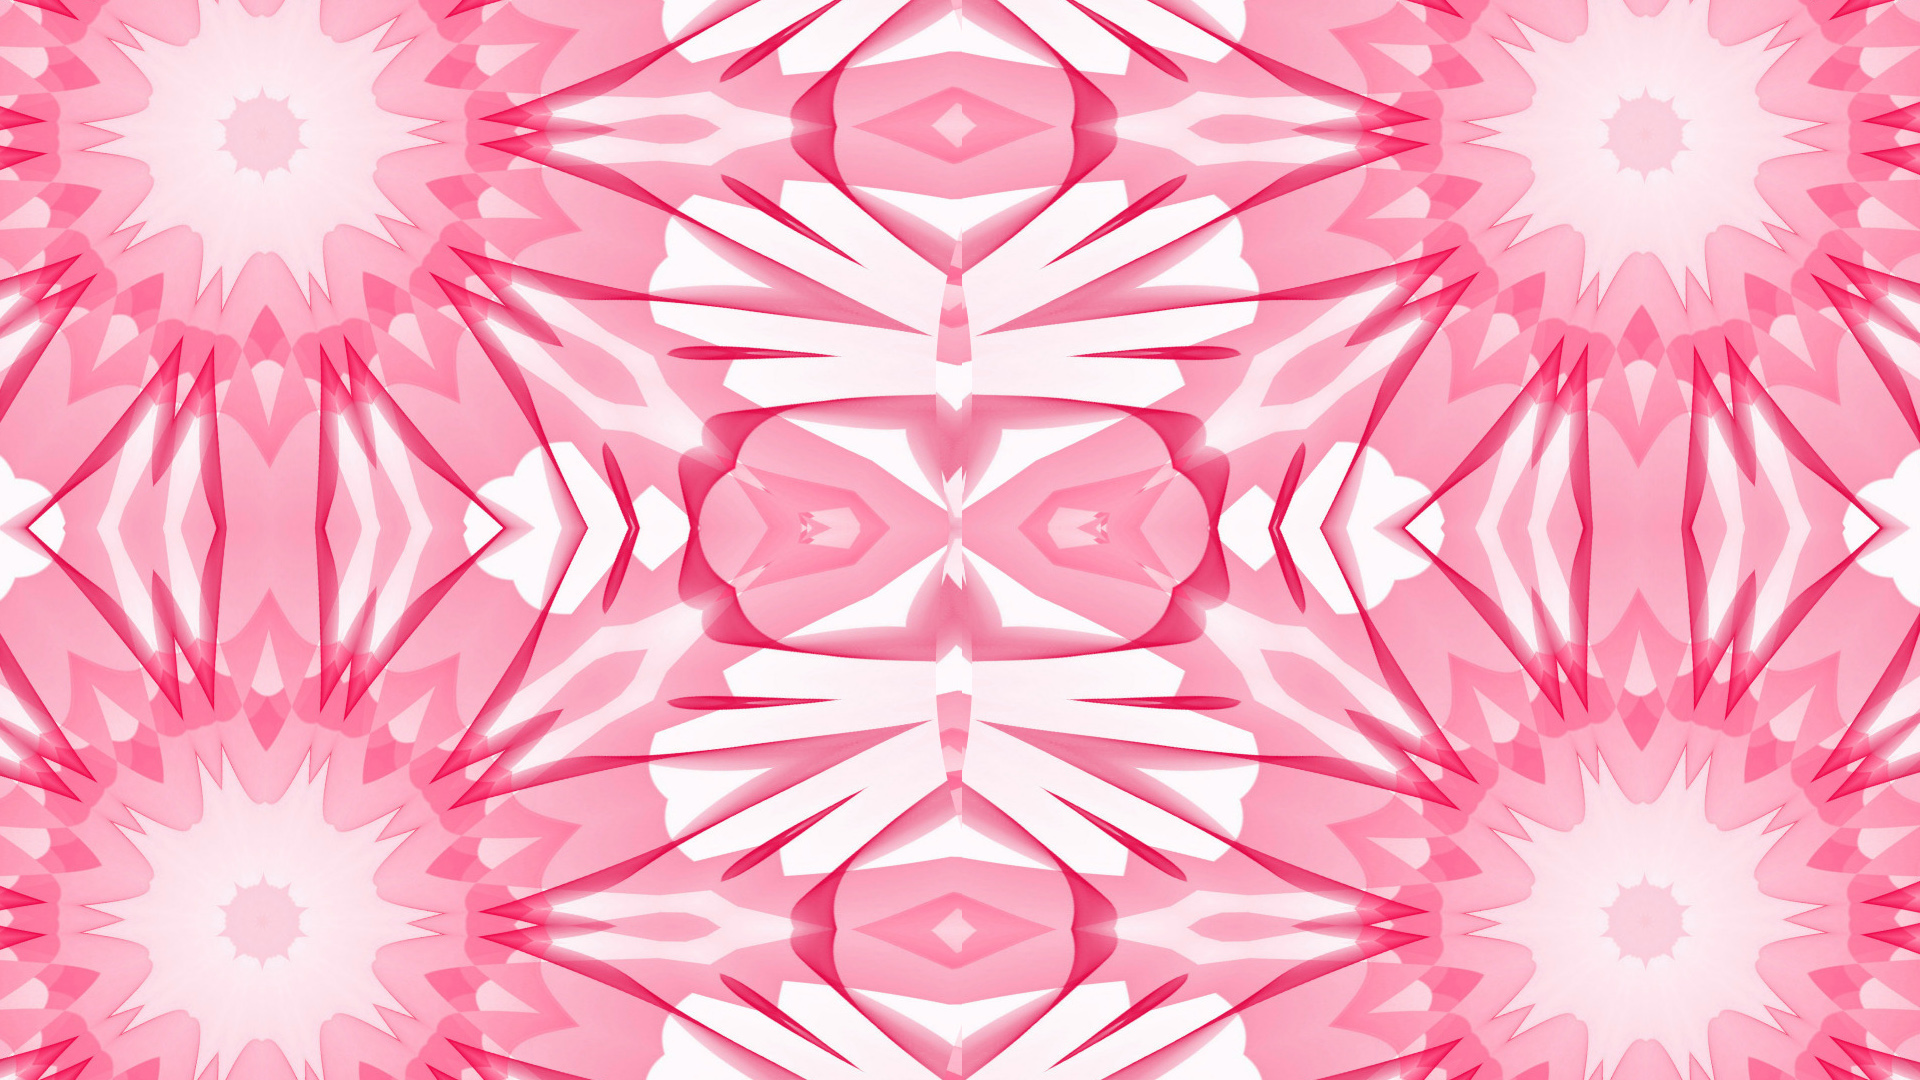 Abstract Artistic Colors Digital Art Kaleidoscope Pattern Pink 1920x1080